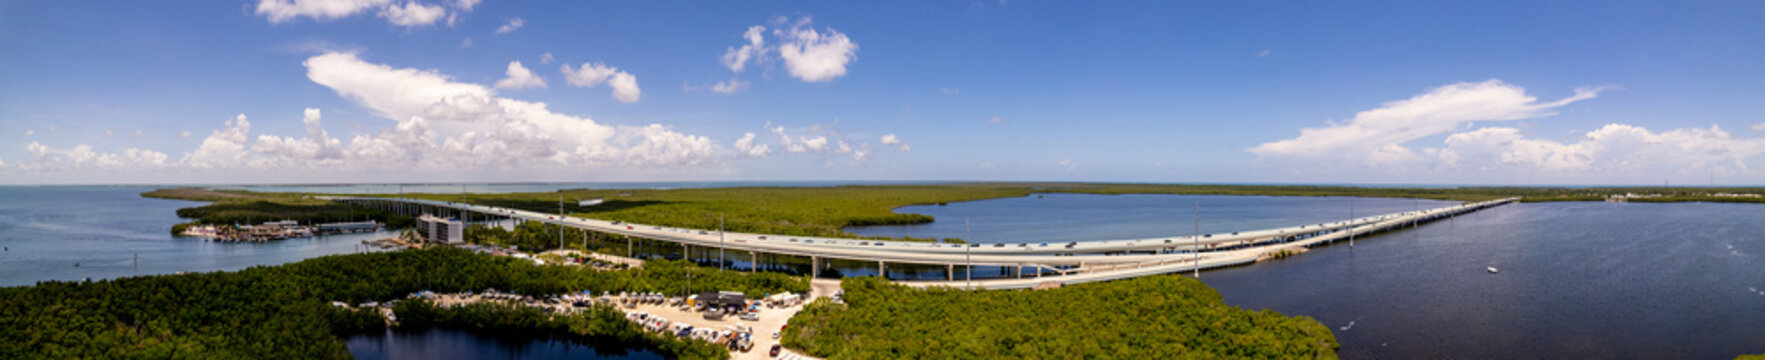 Florida Keys bridge and everglades nature landscape